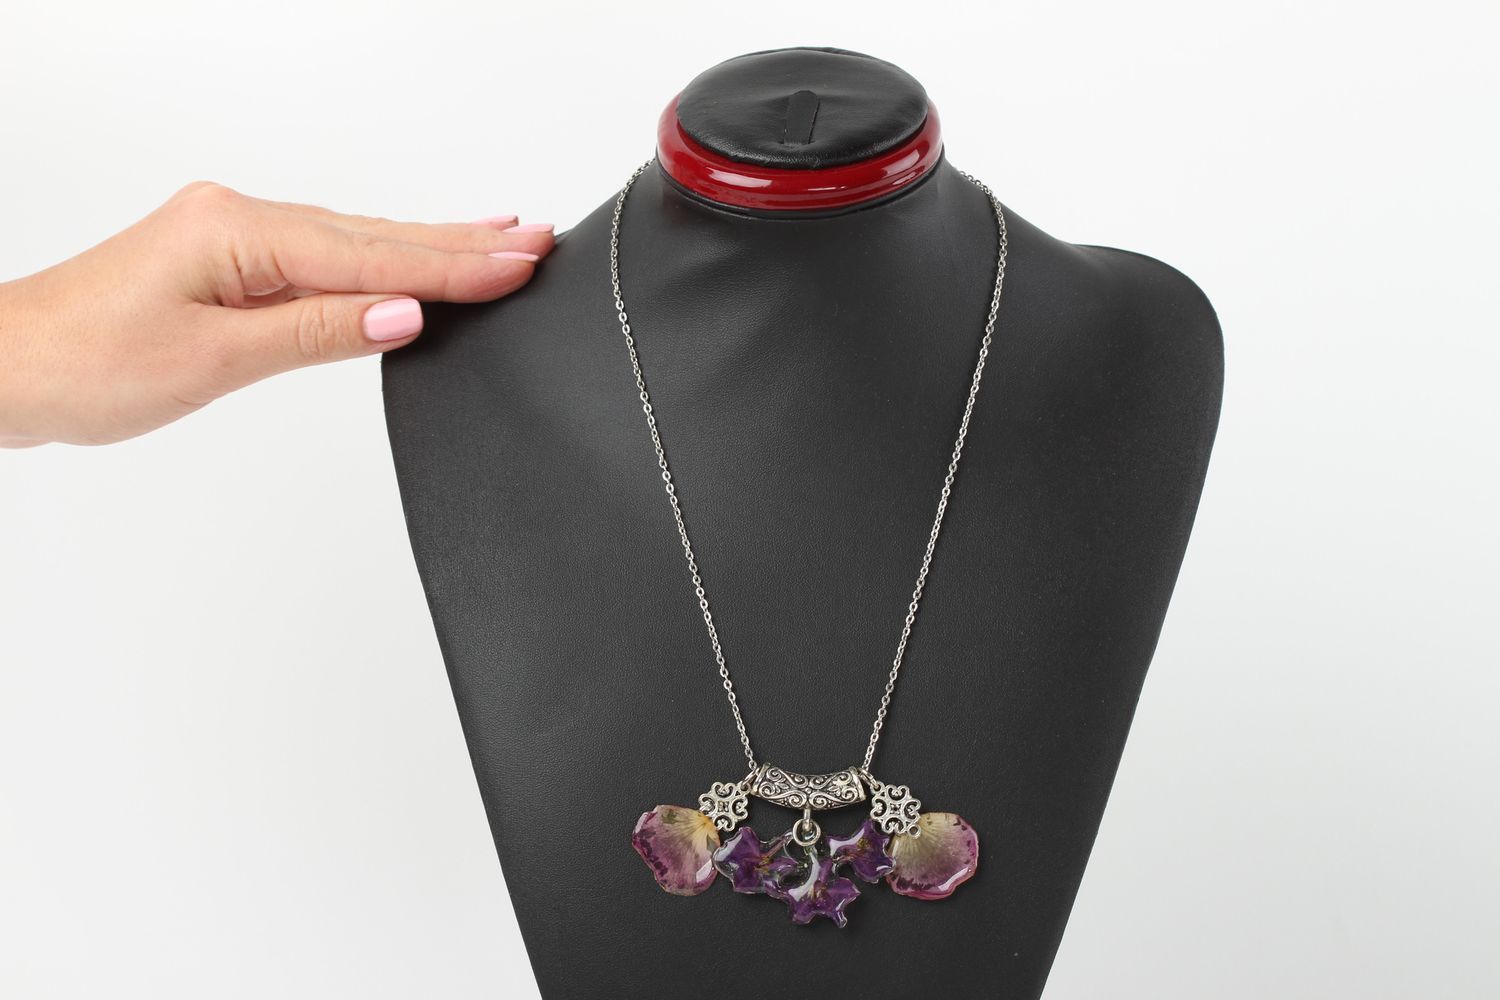 Handmade botanic necklace jewelry with natural flowers designer botanic jewelry photo 5